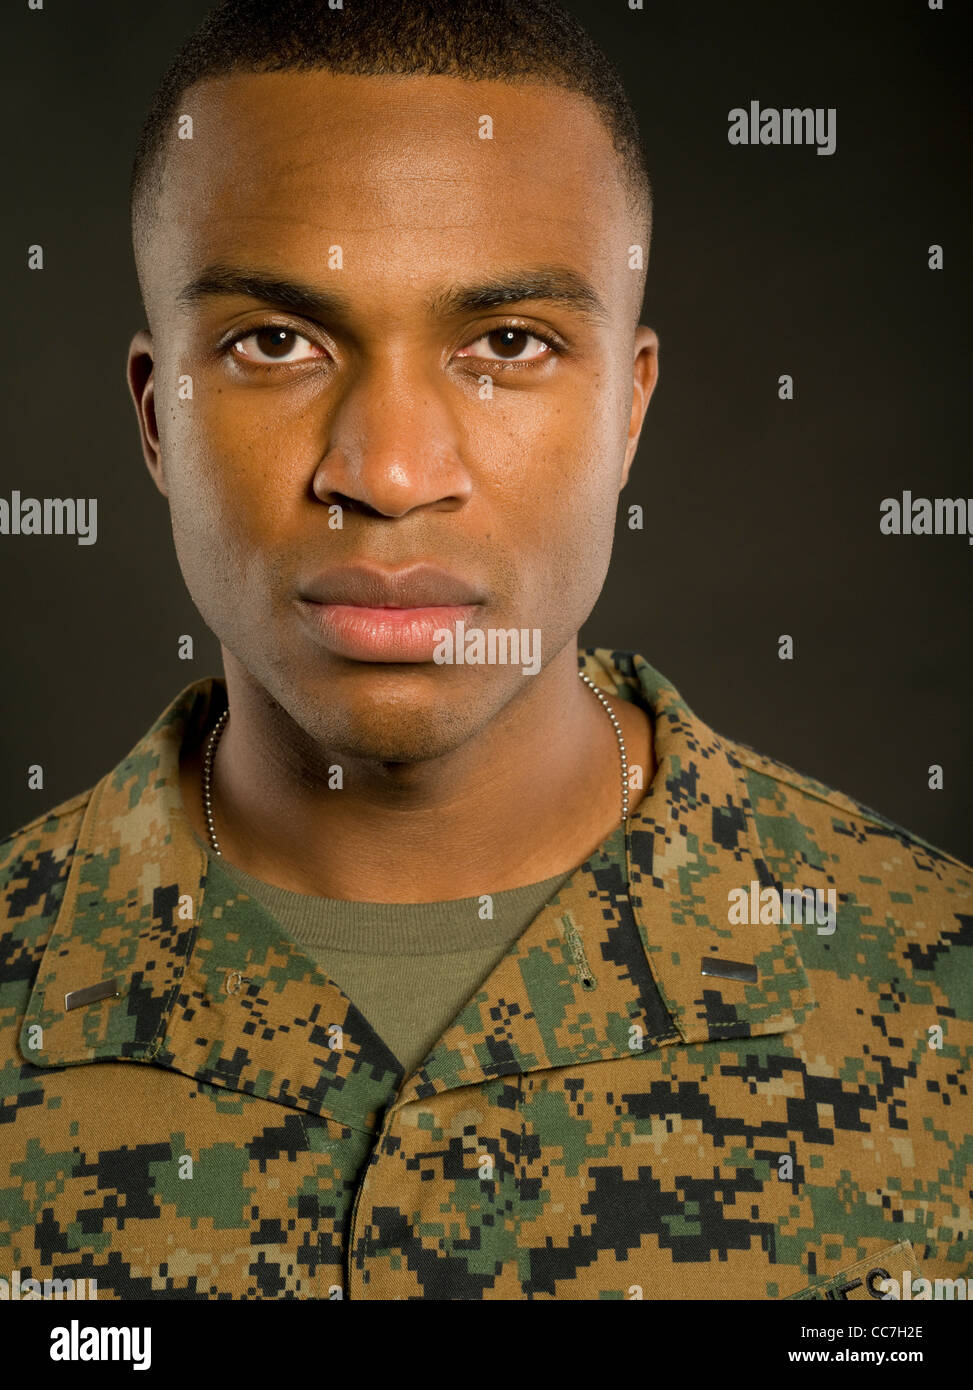 United States Marine Corps Officer in Marine Corps Combat Utility Uniform MARPAT digital camouflage pattern woodland pattern Stock Photo